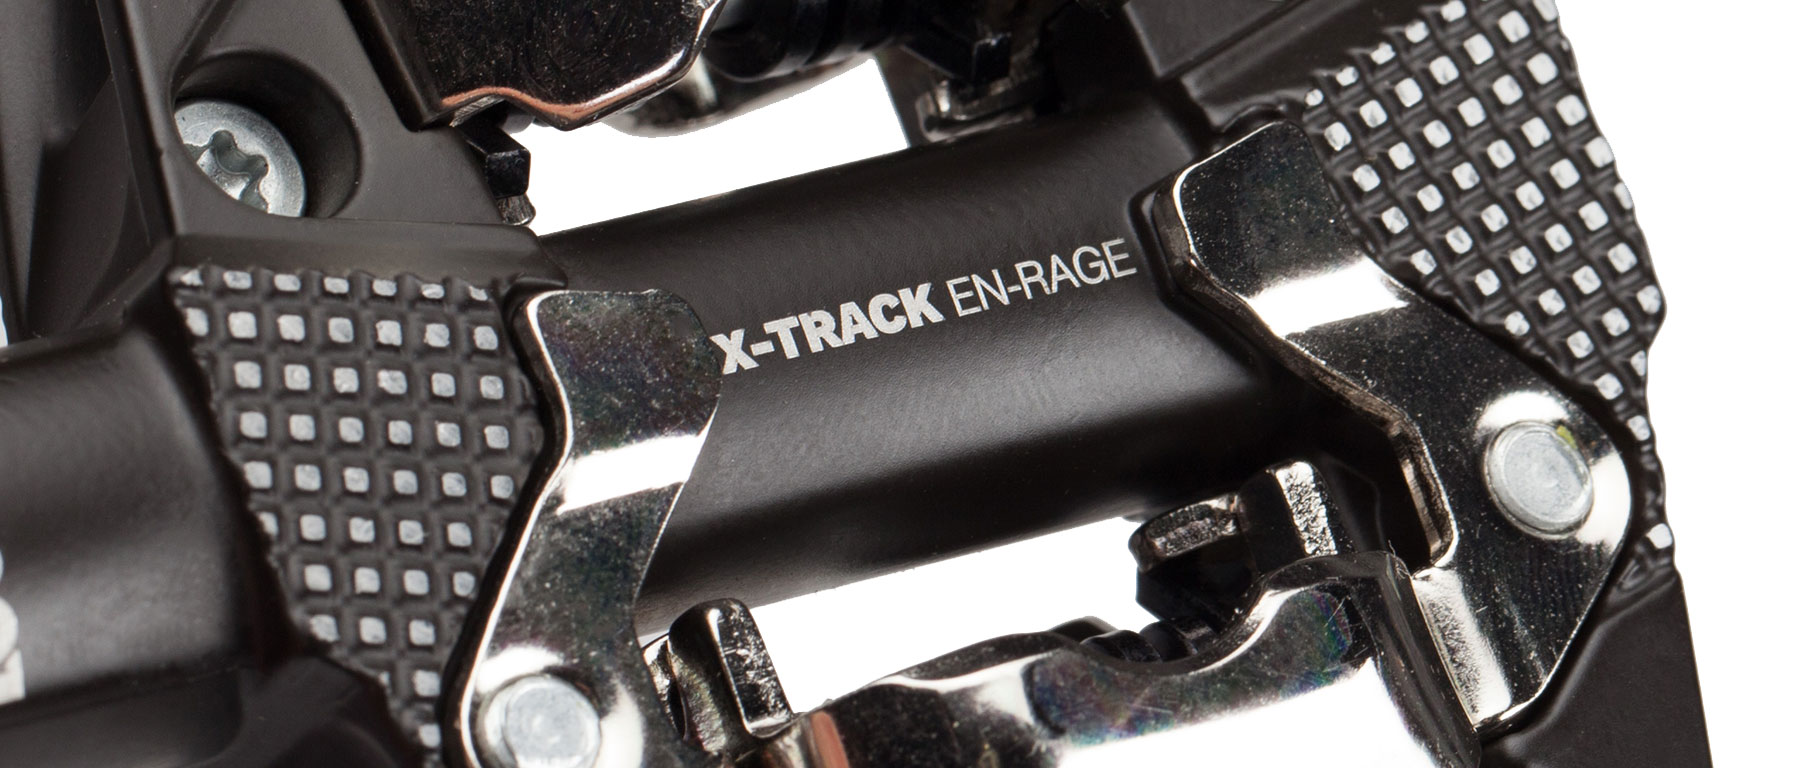 LOOK X-Track En-Rage MTB Pedals